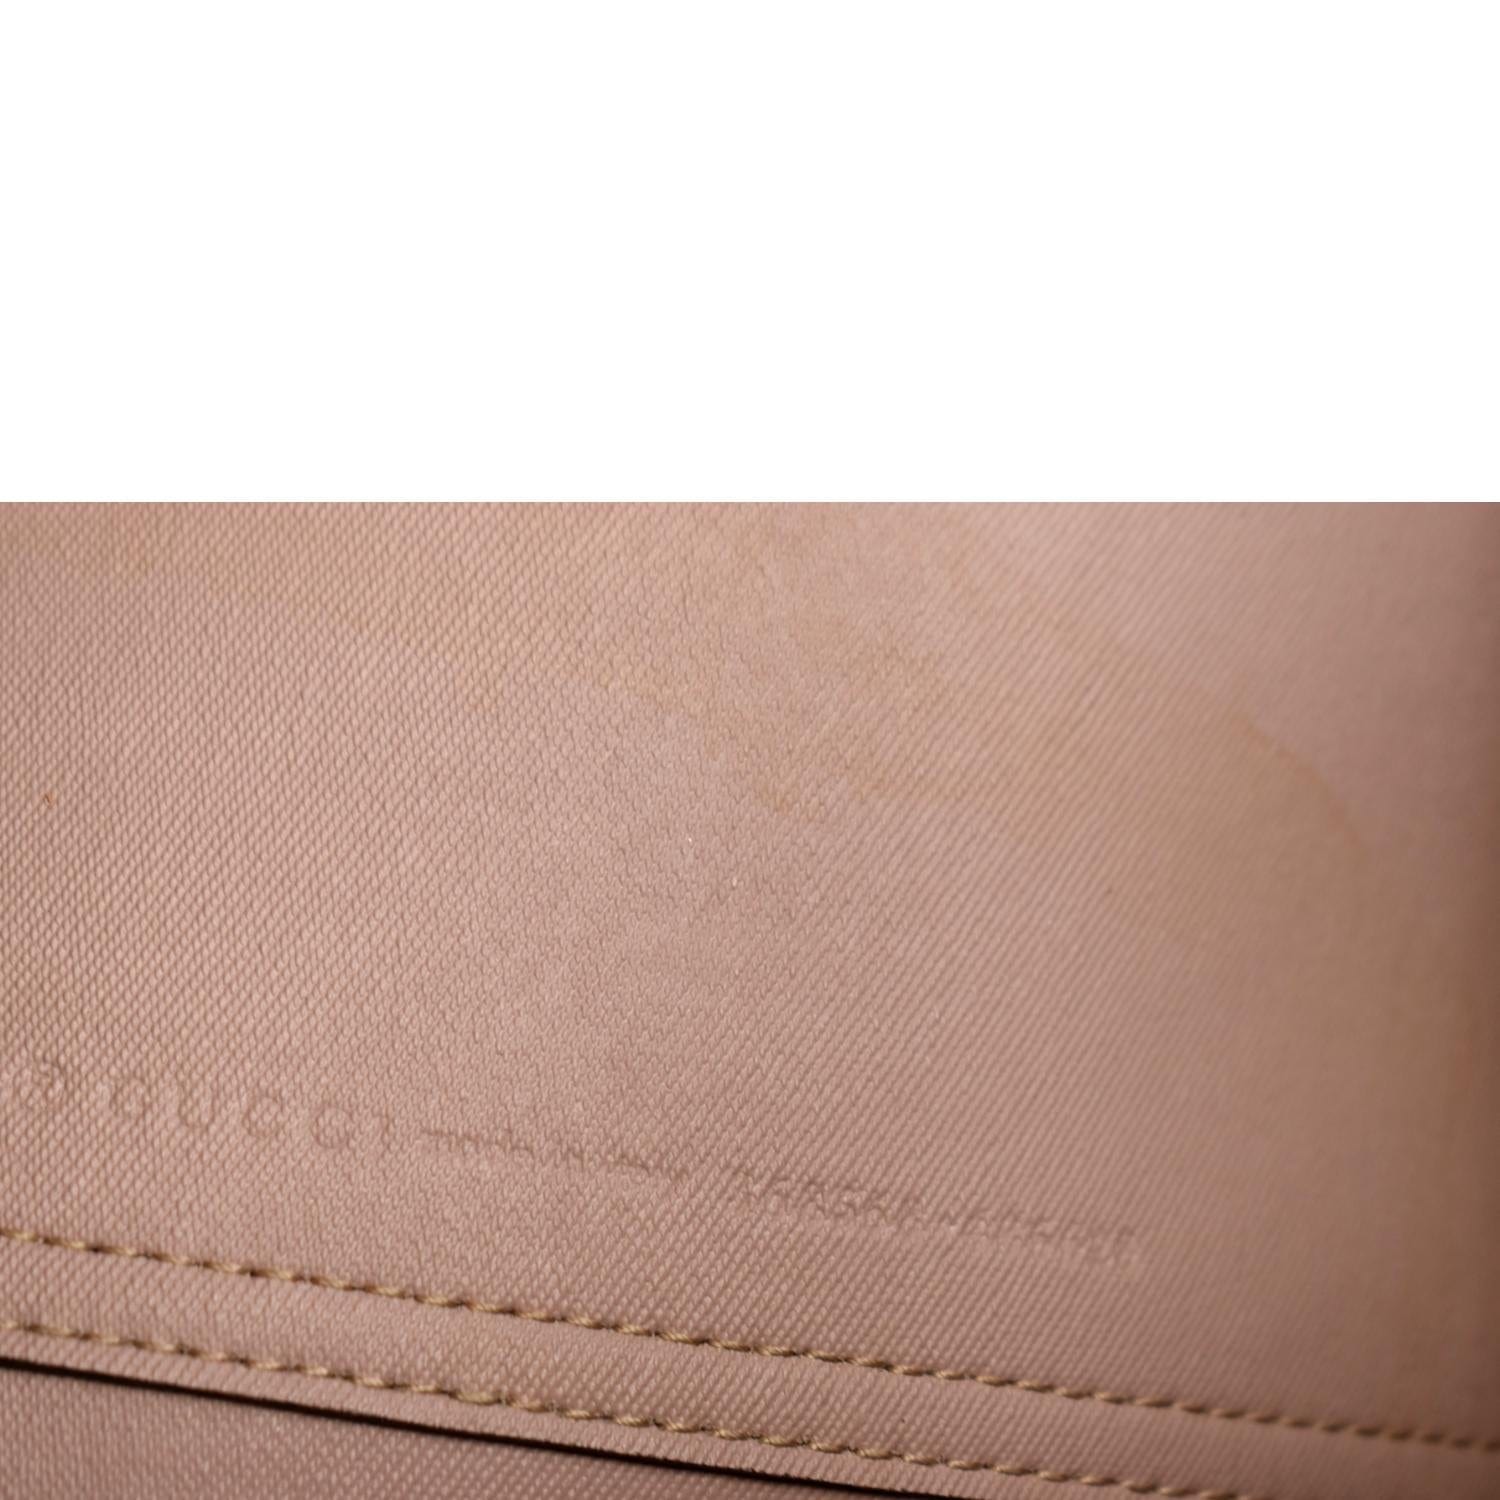 GUCCI Reversible GG Supreme Canvas Leather Tote Bag Beige